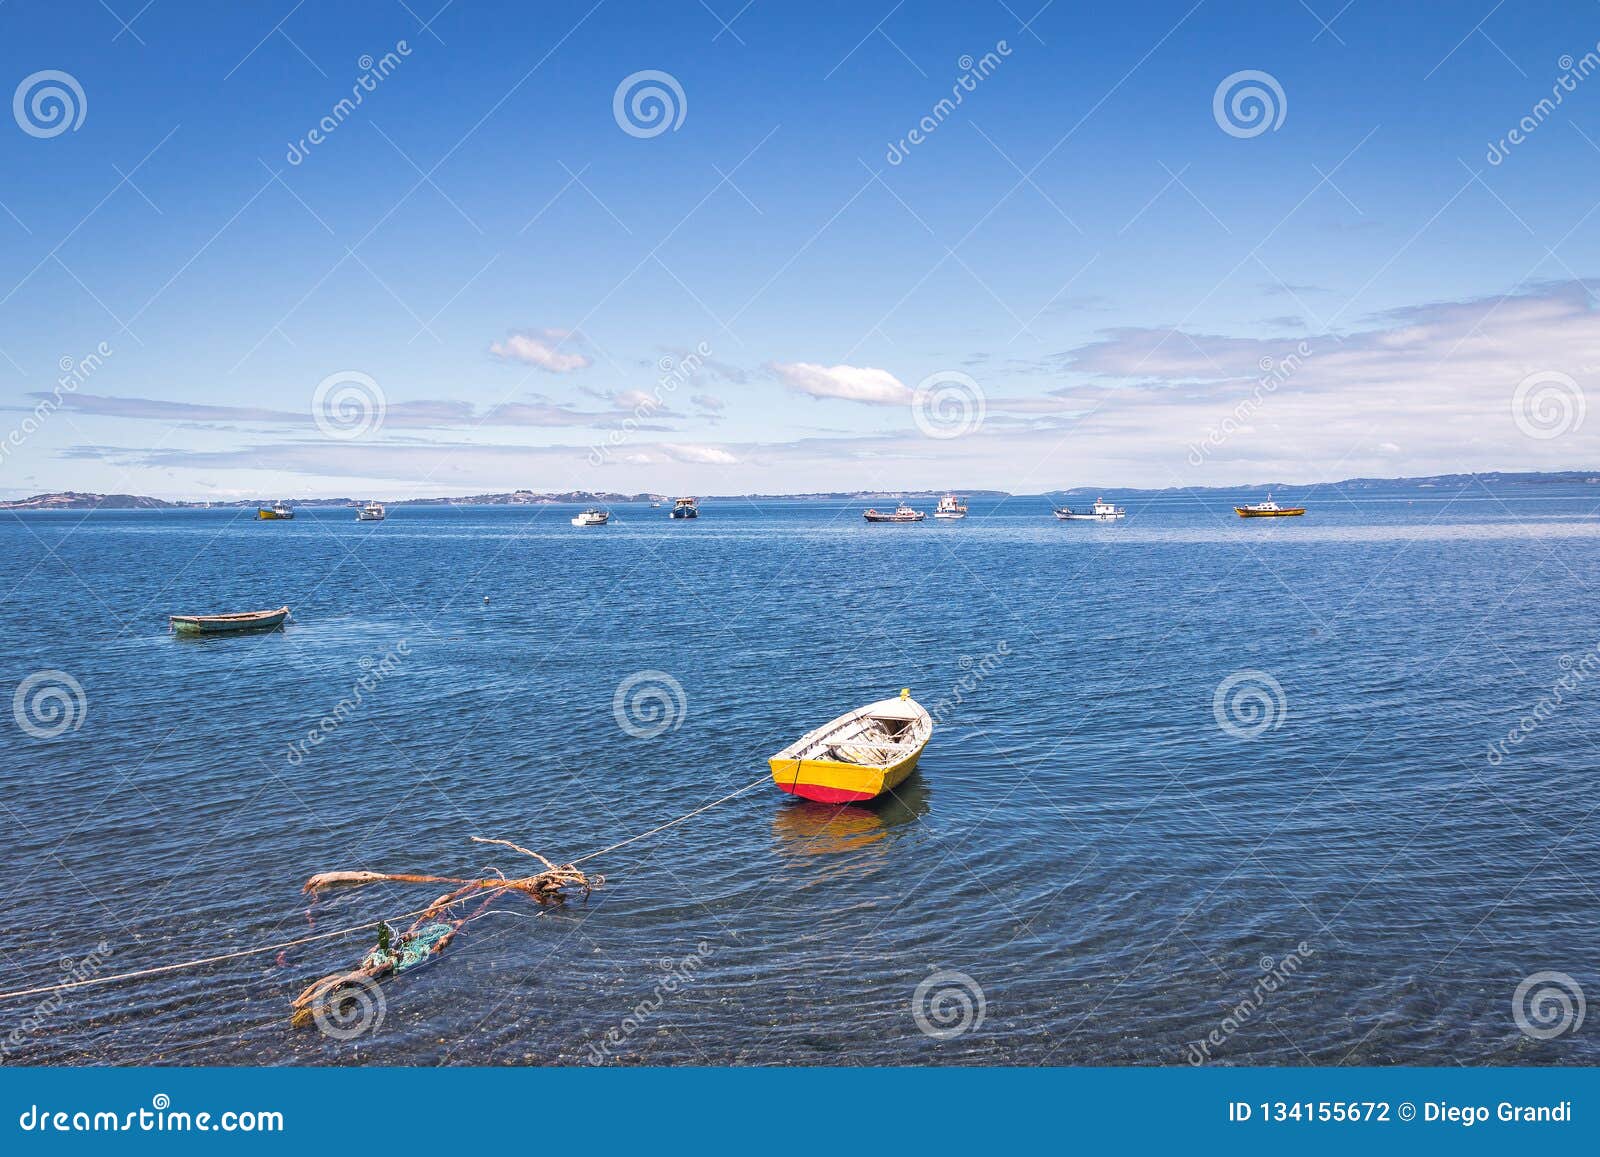 boats at tenaun bay - tenaun, chiloe island, chile